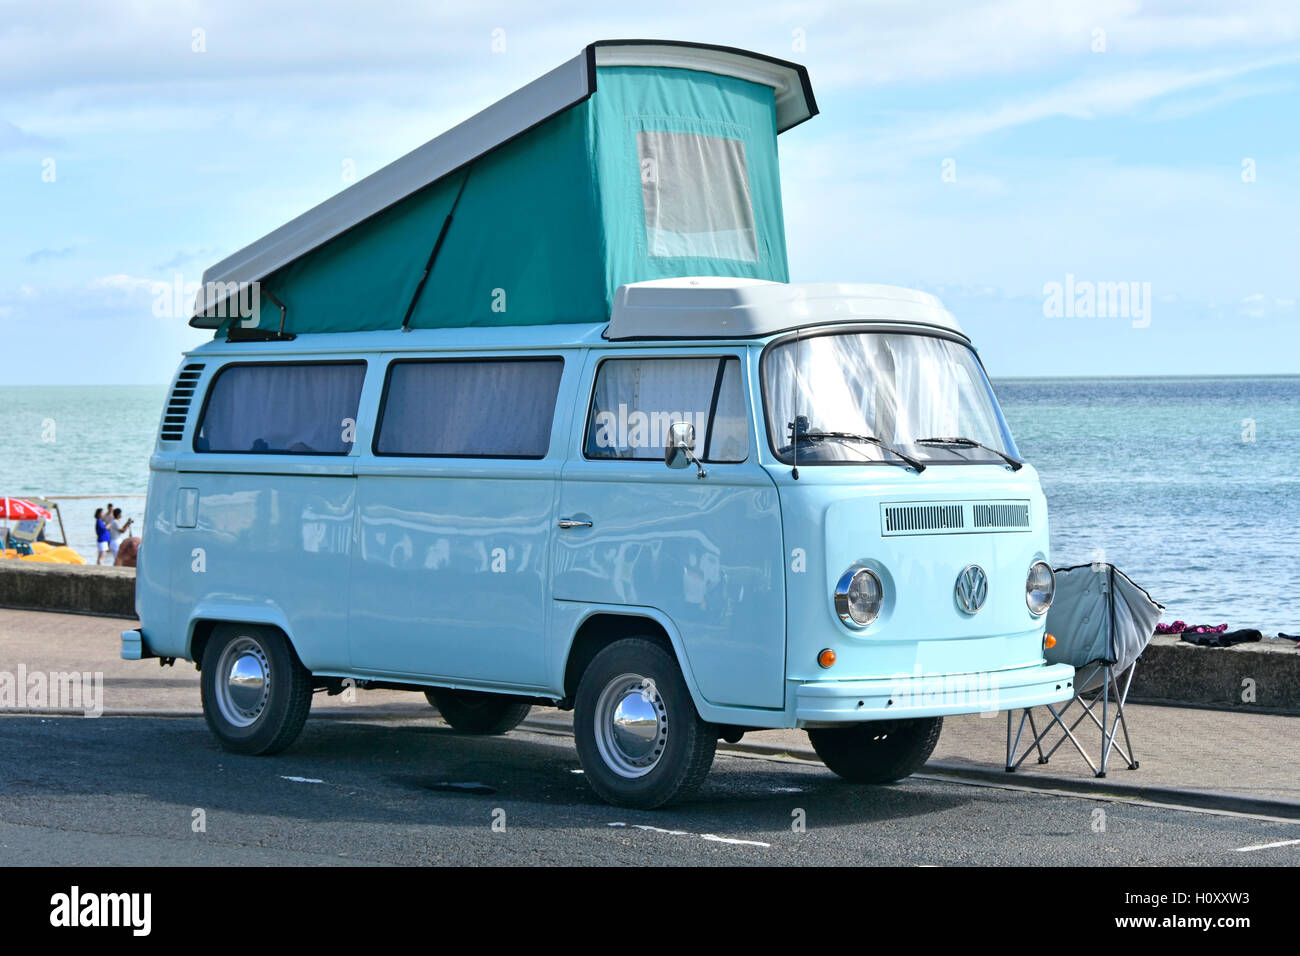 VW Volkswagen RV Motorhome Wohnmobil angehoben Dach geparkt Shanklin Meer Isle Of Wight, England UK Urlaub direkt am Meer Promenade Parkplatz Strand & Meer Stockfoto